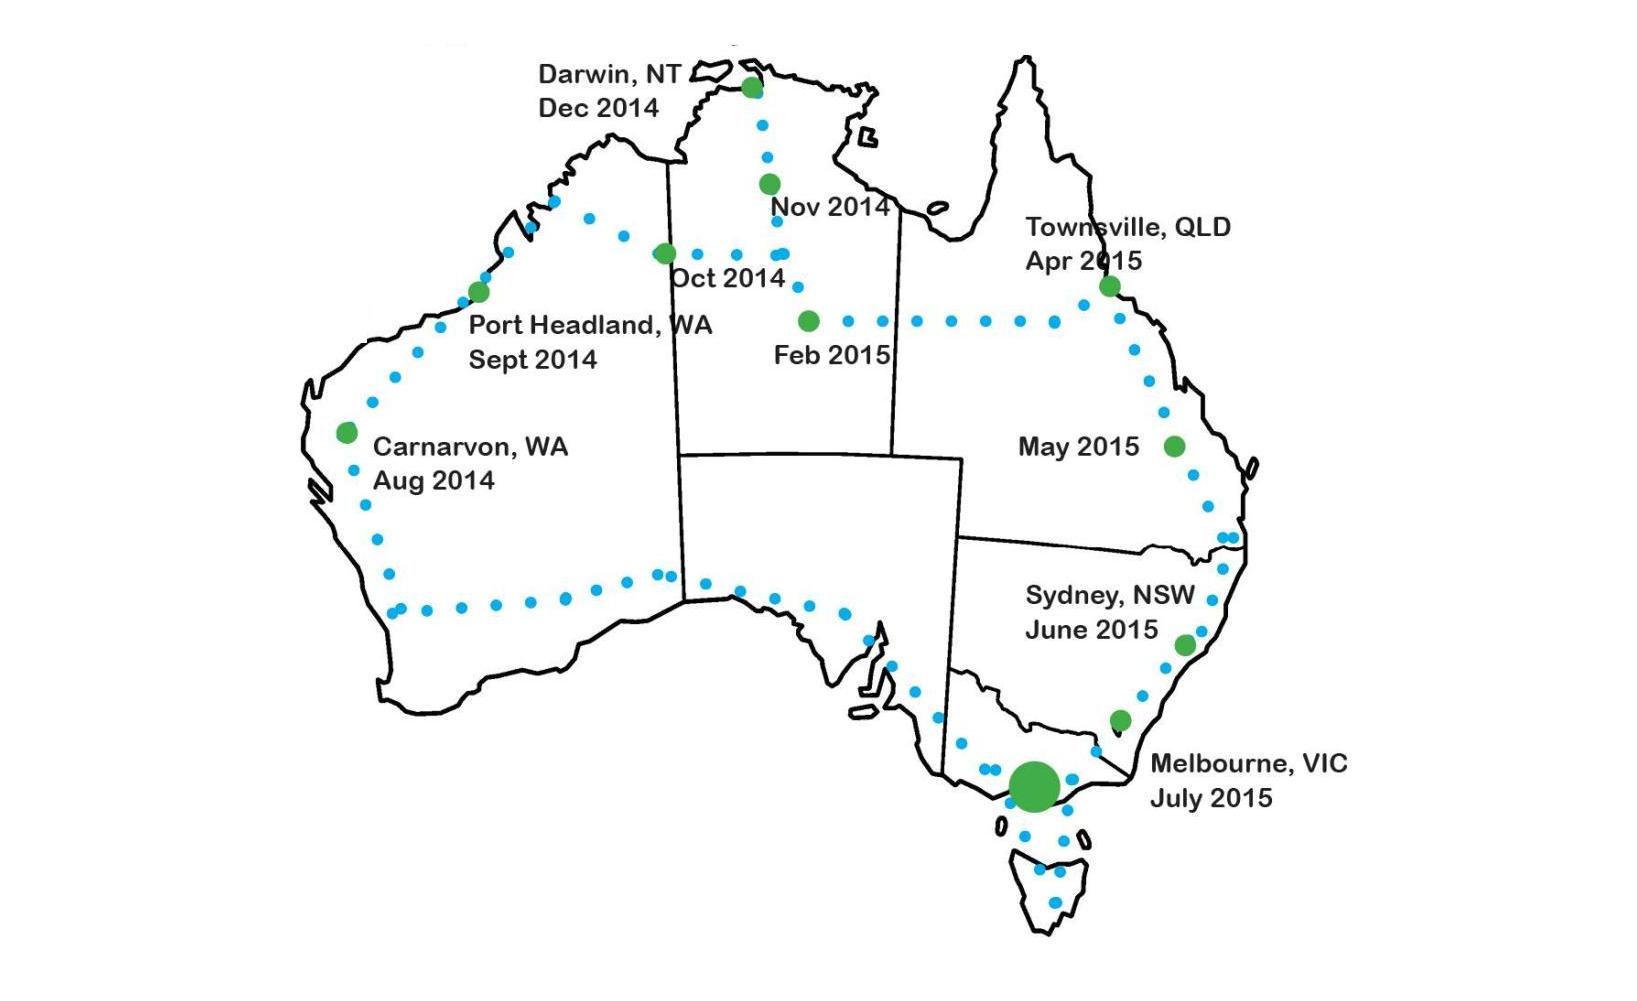 scott loxley's route all over australia